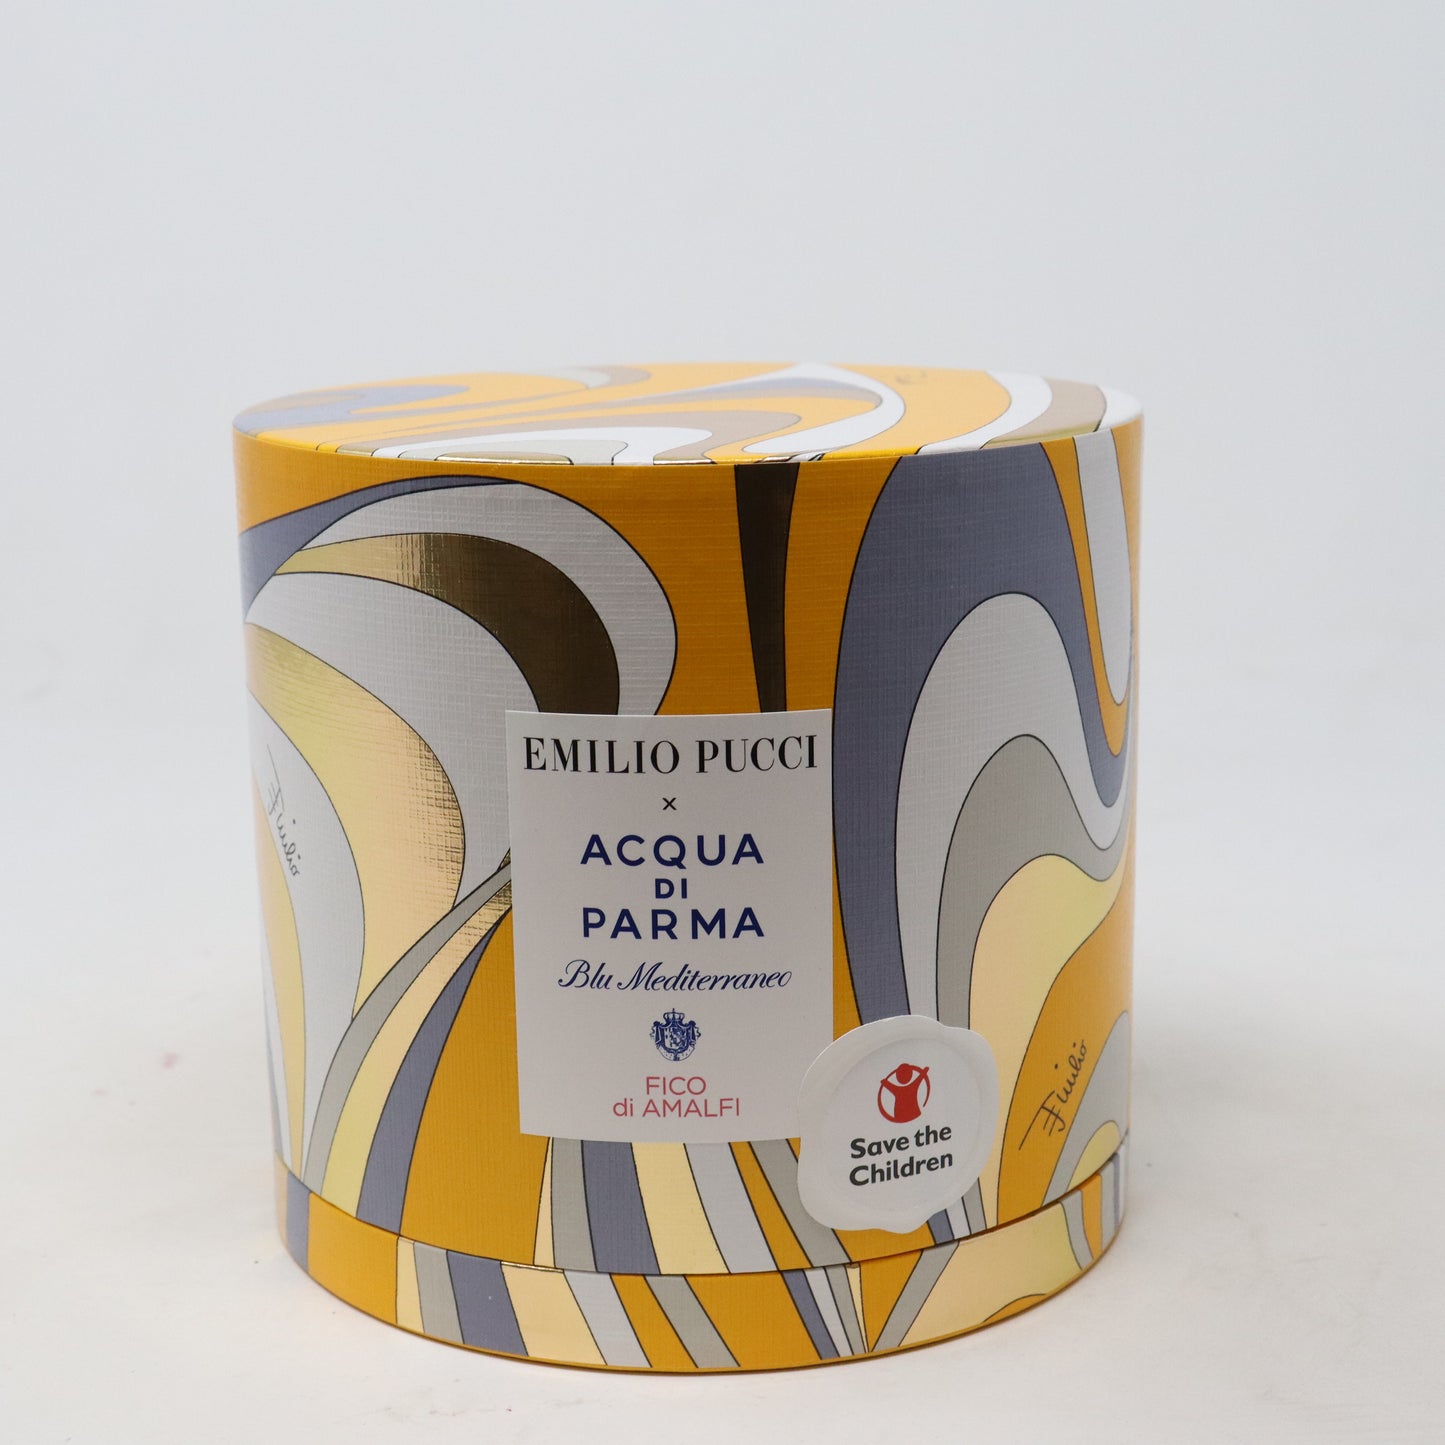 Acqua Di Parma Emilio Pucci Fico Di Amalfi Eau De Toilette 3-Pcs Set   New